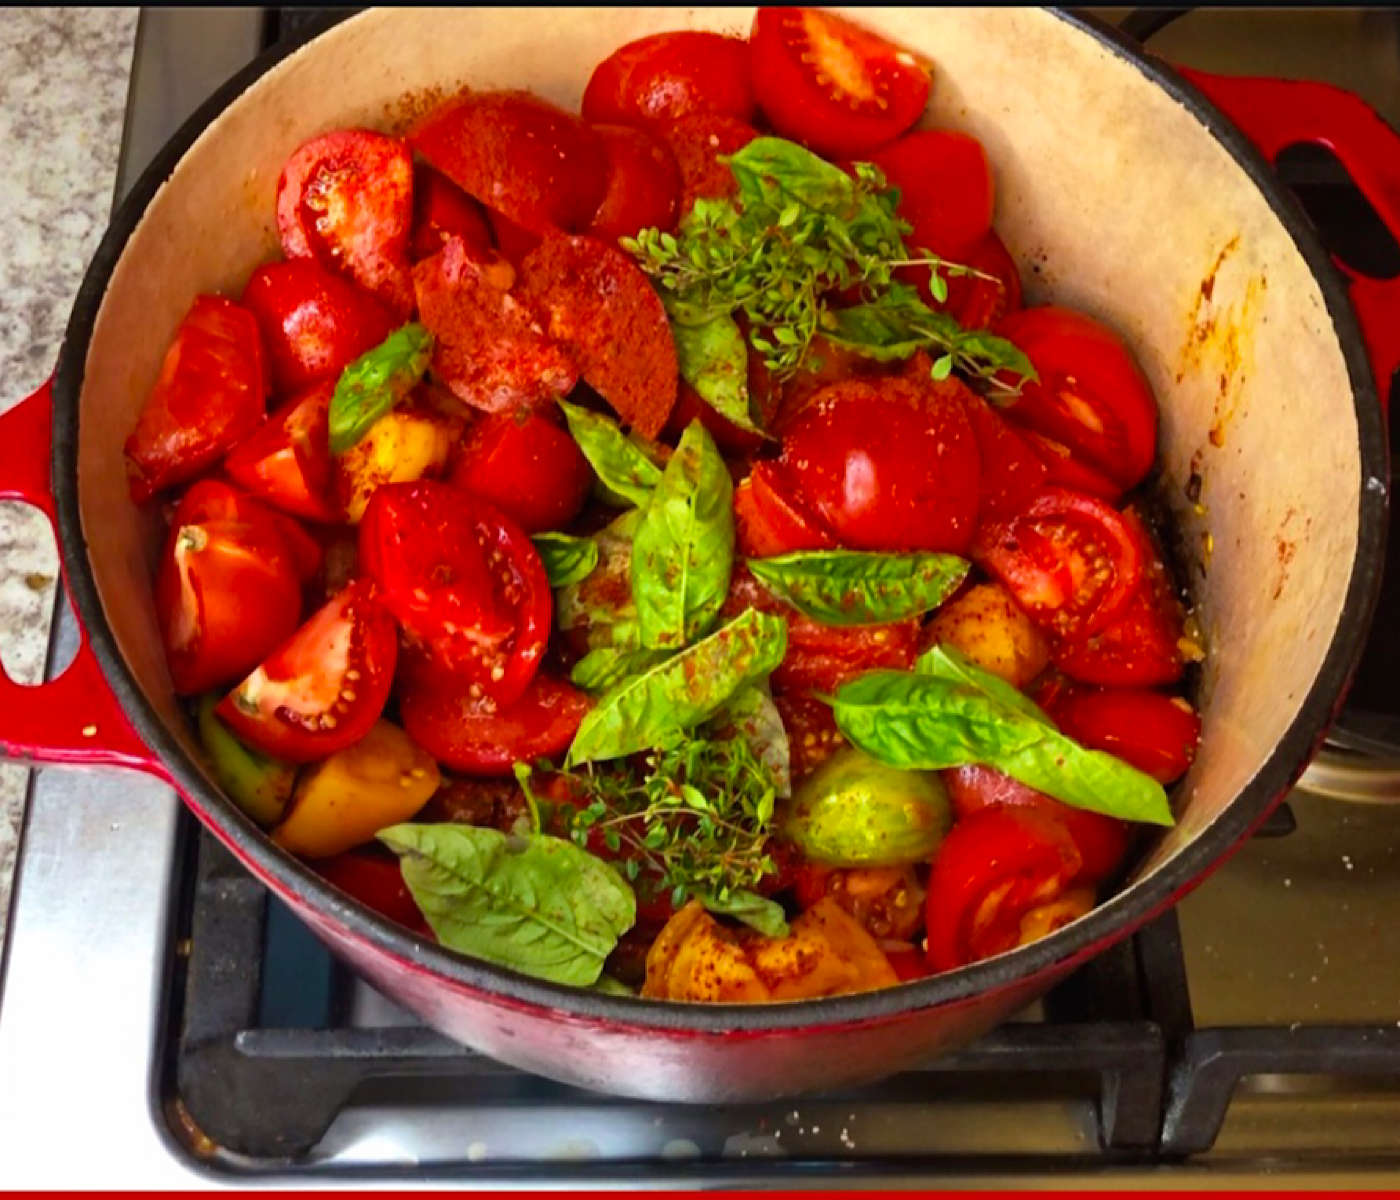 Tomato sauce with companion plants of tomato and basil